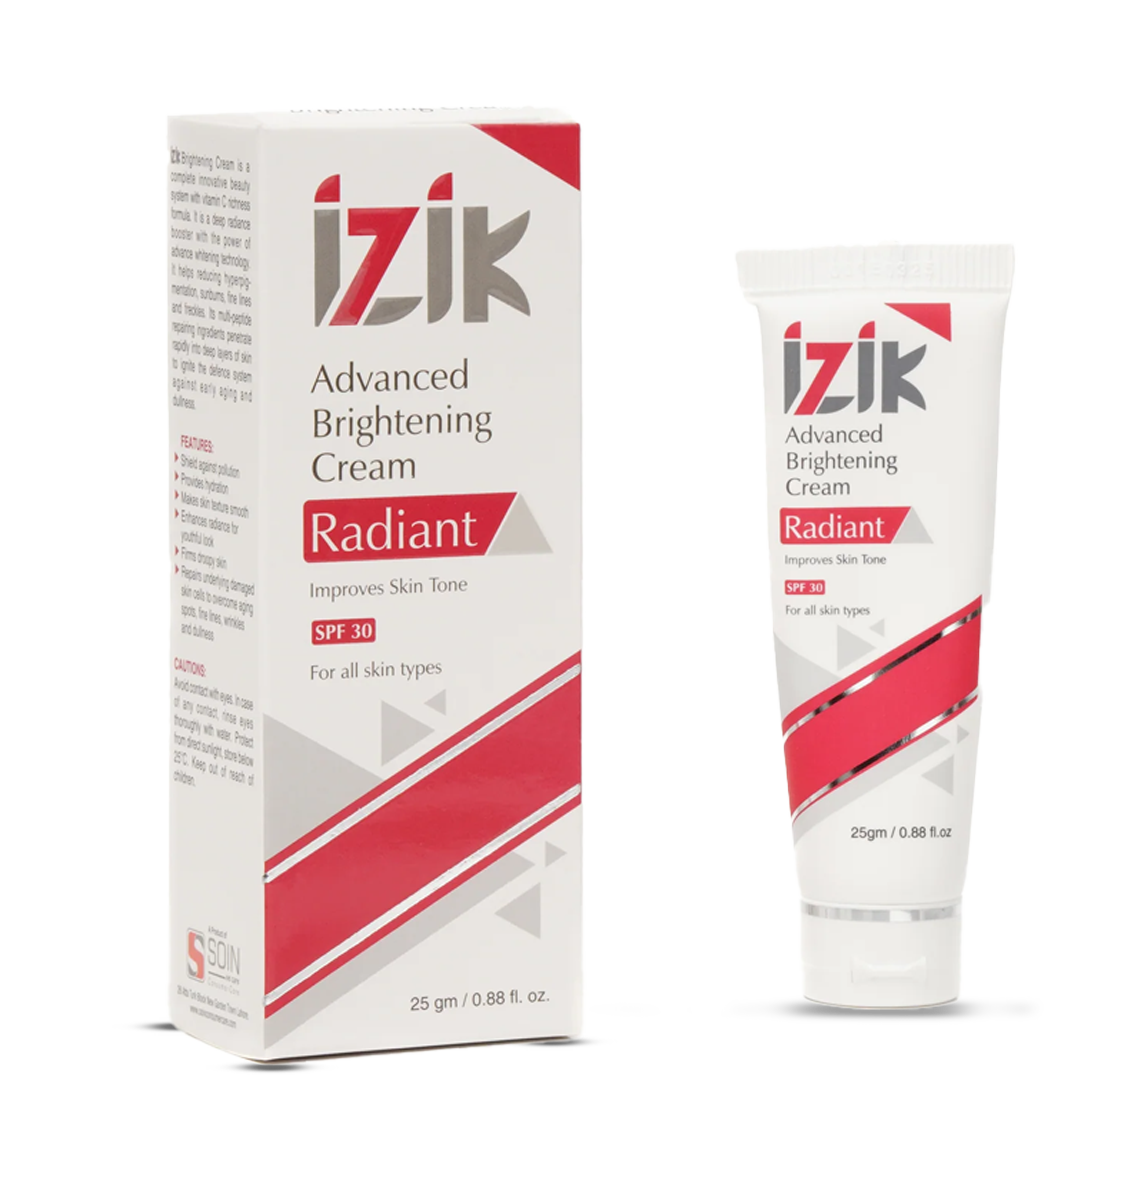 Izik Advanced Brightening Cream